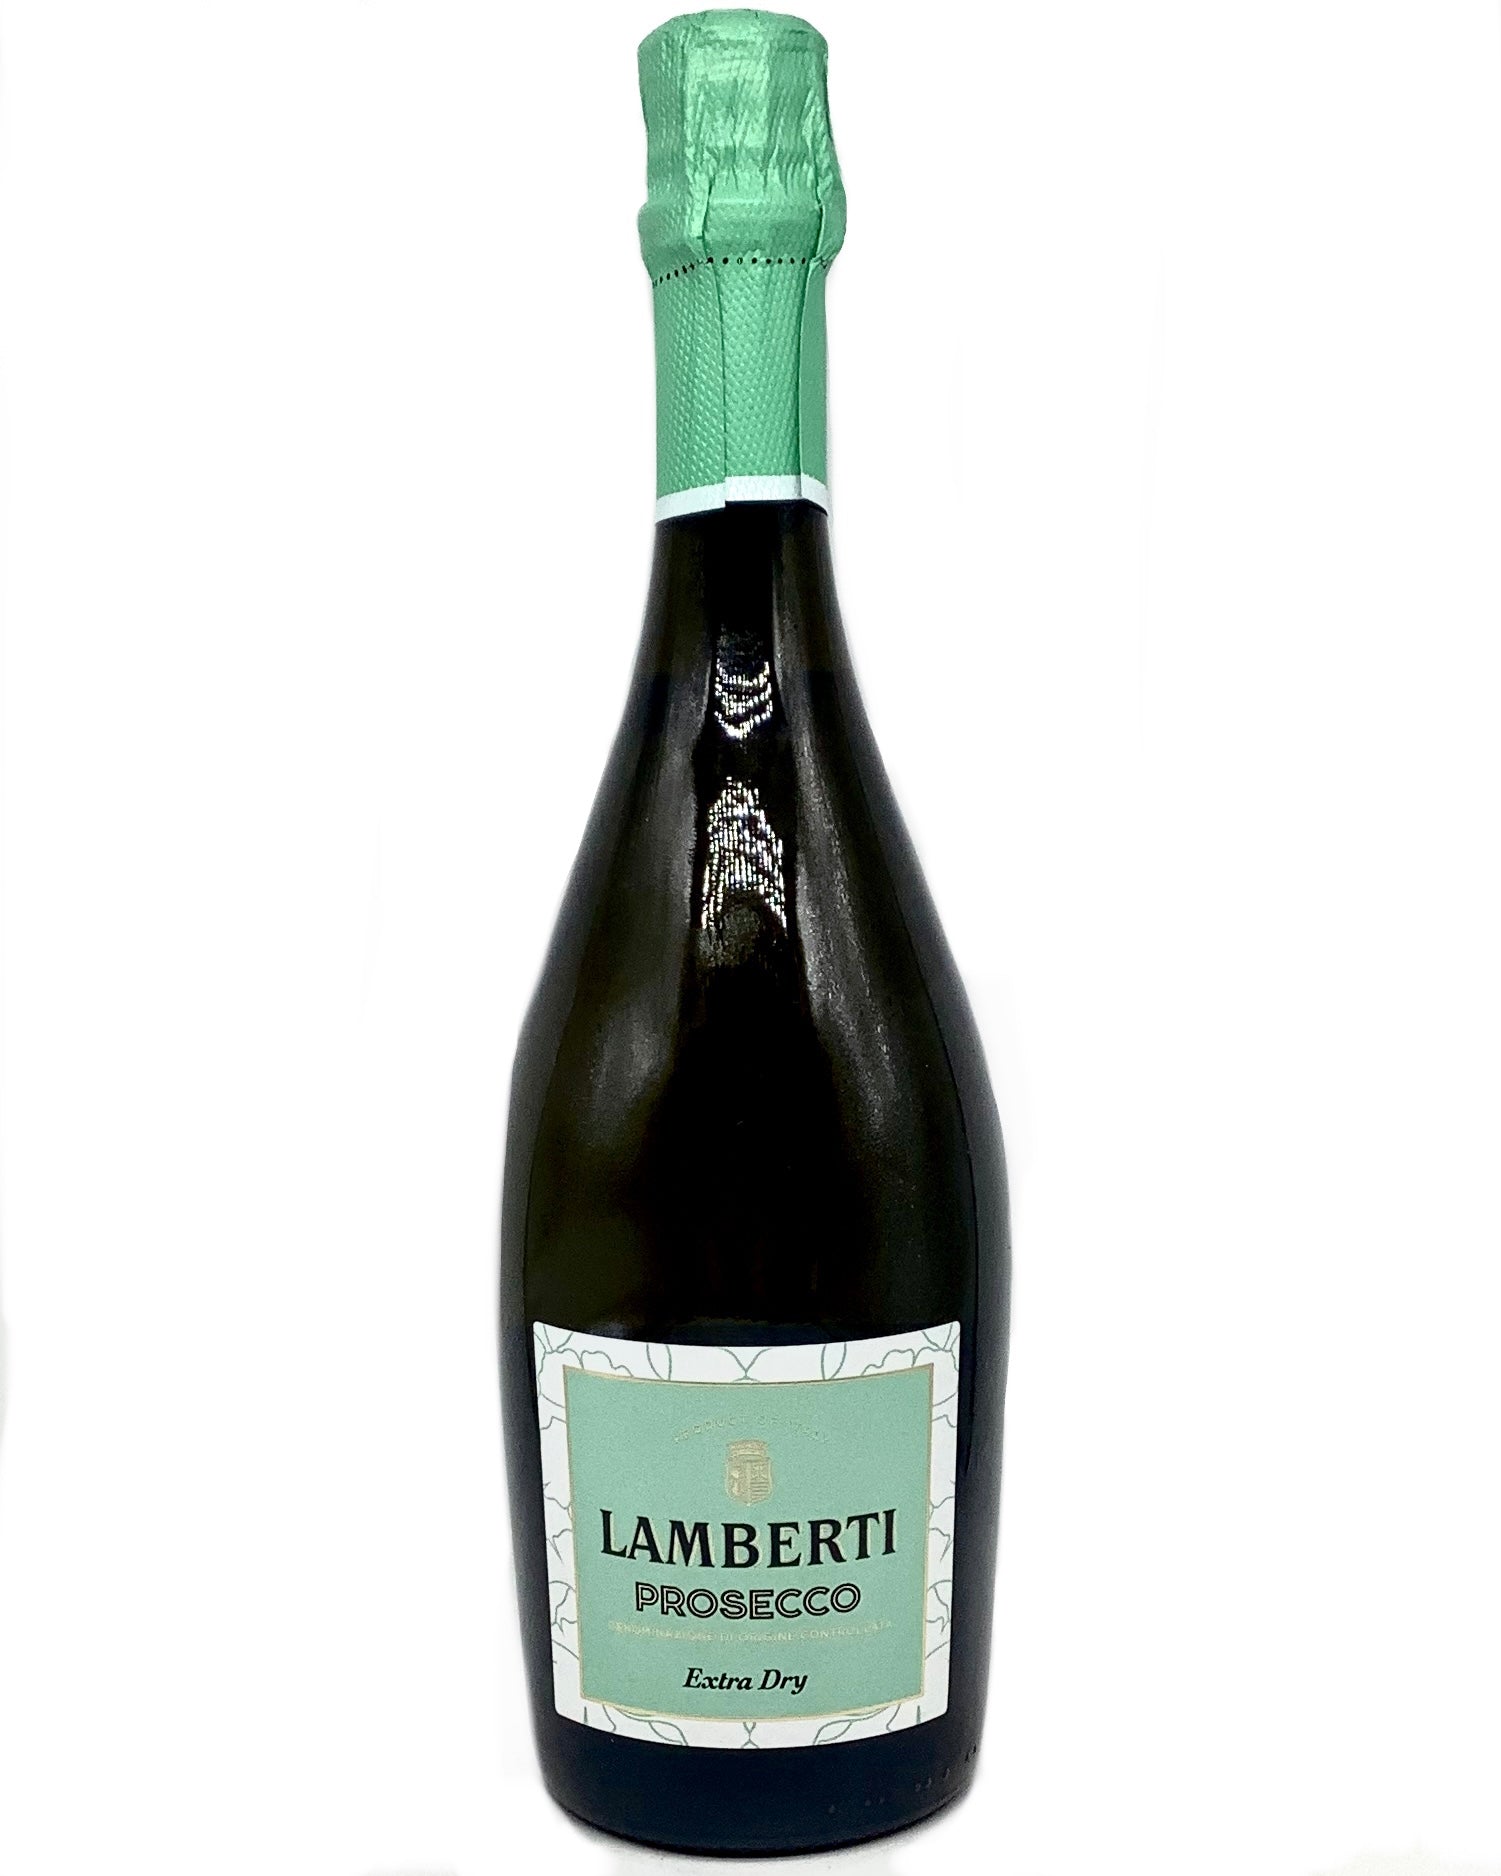 Lamberti Prosecco Extra Dry